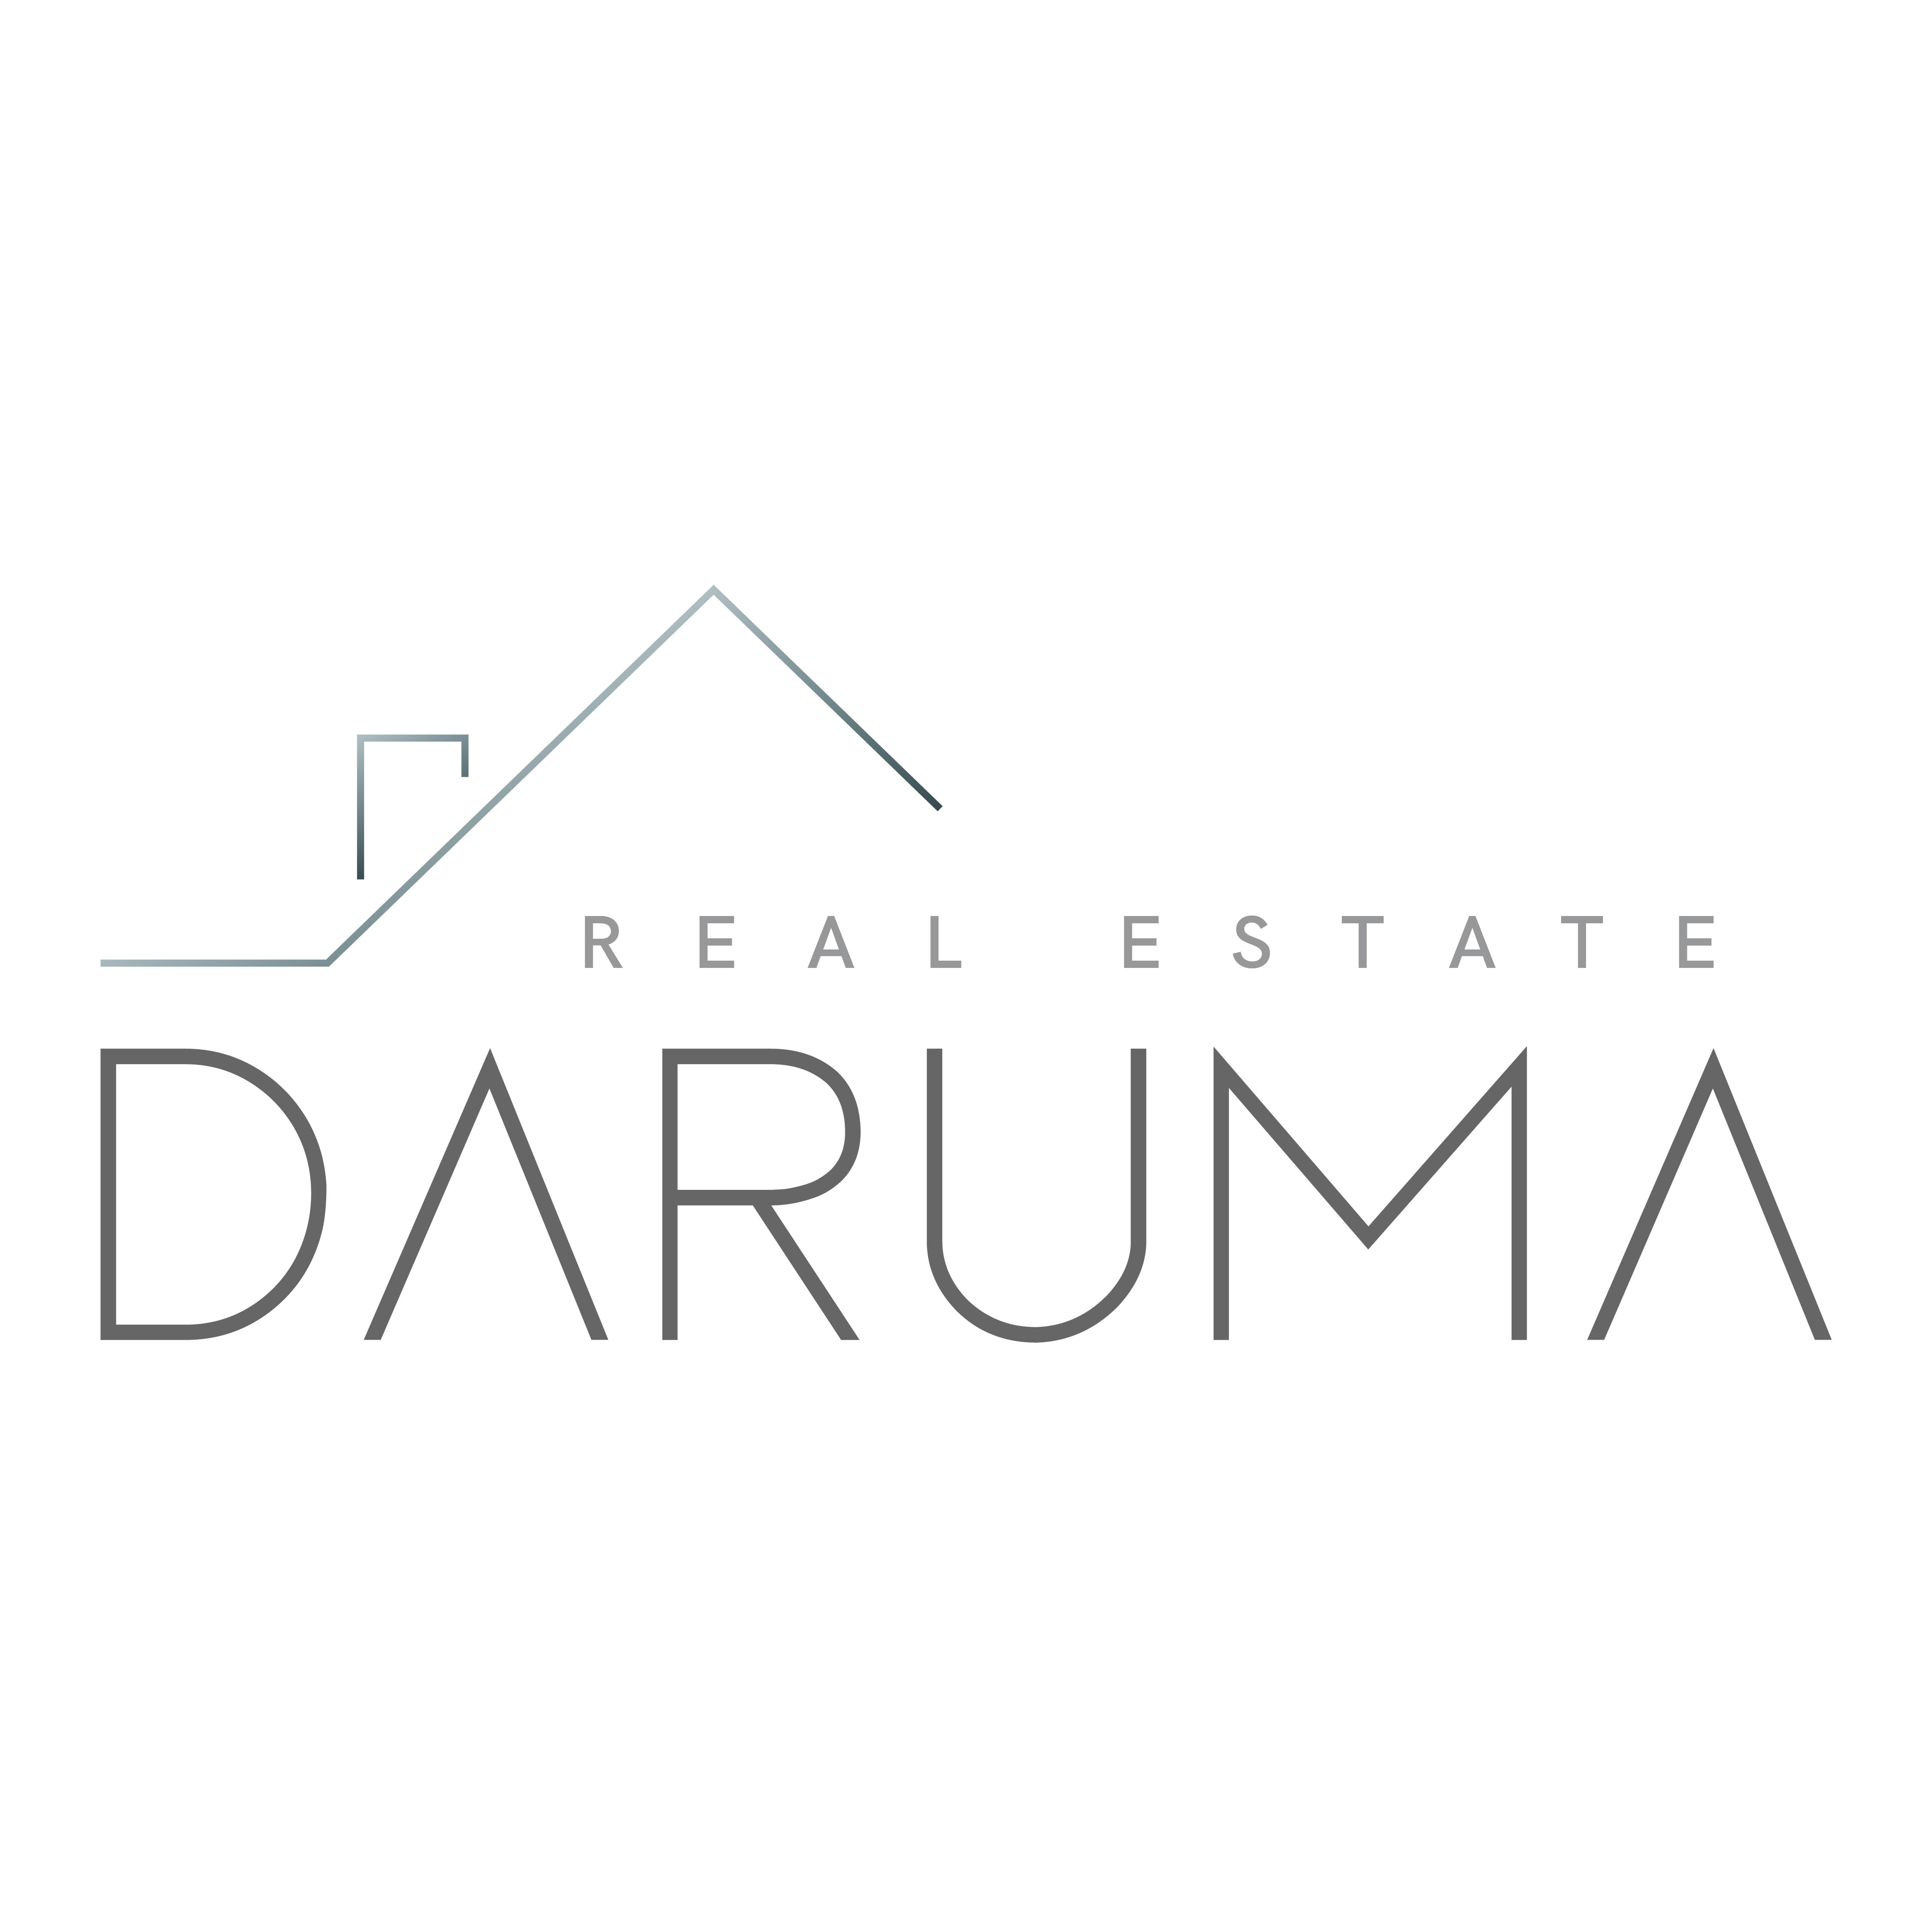 Daruma Real Estate